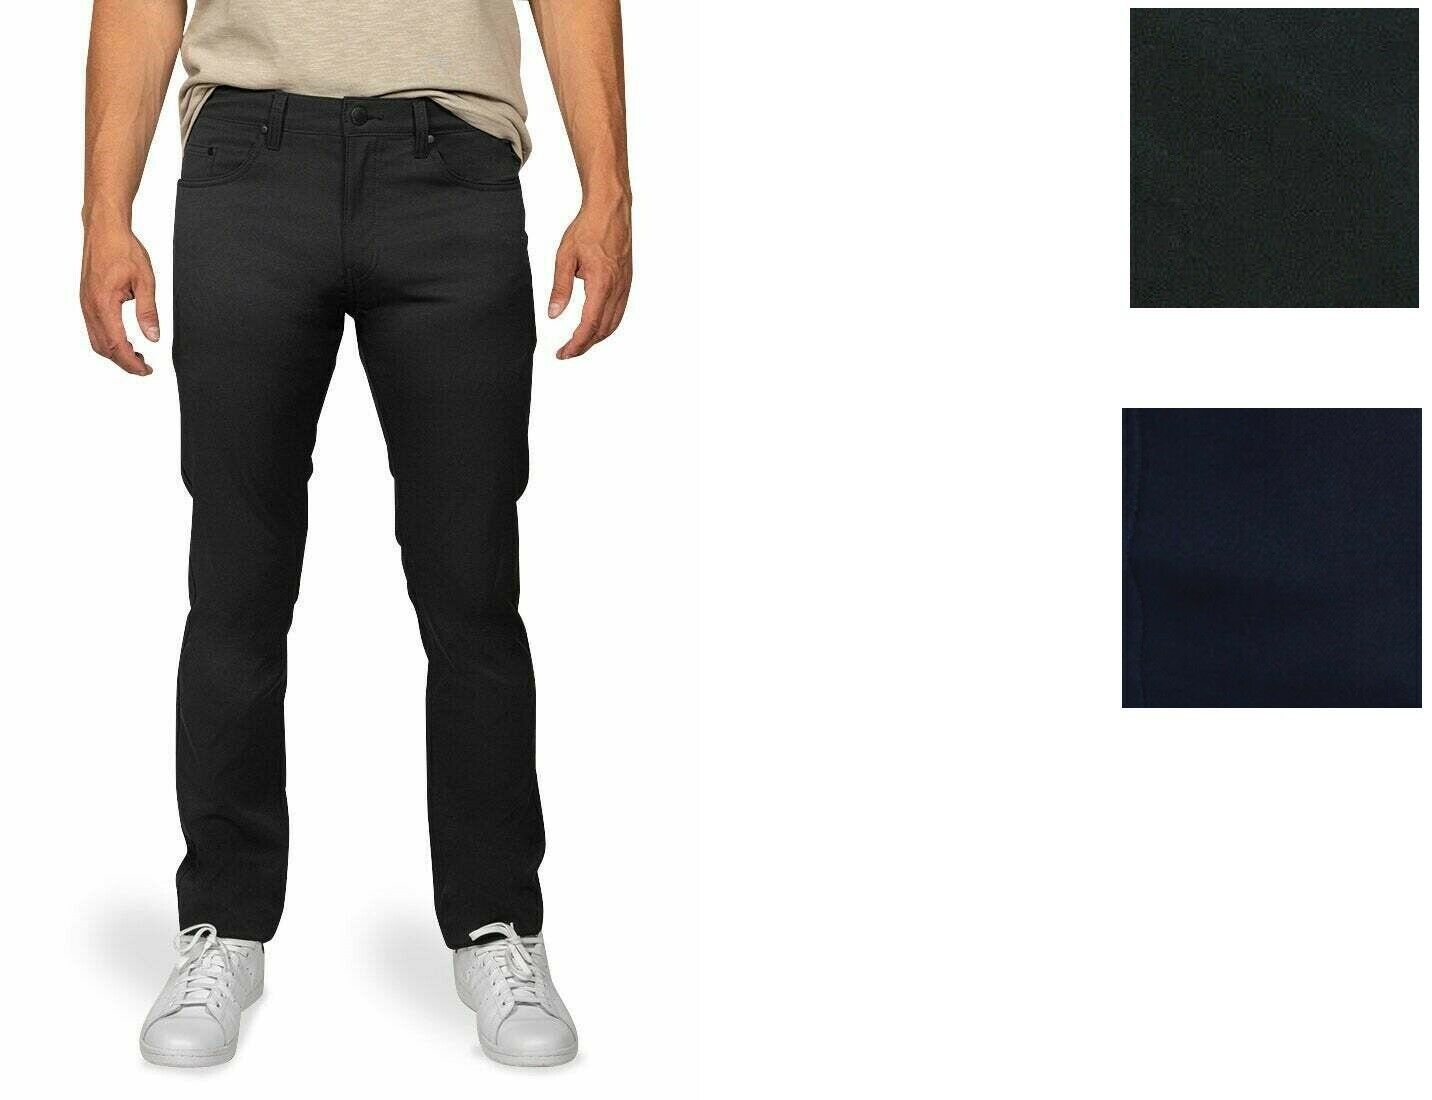 Jachs Men's 5 Pocket Stretch Pant and 50 similar items